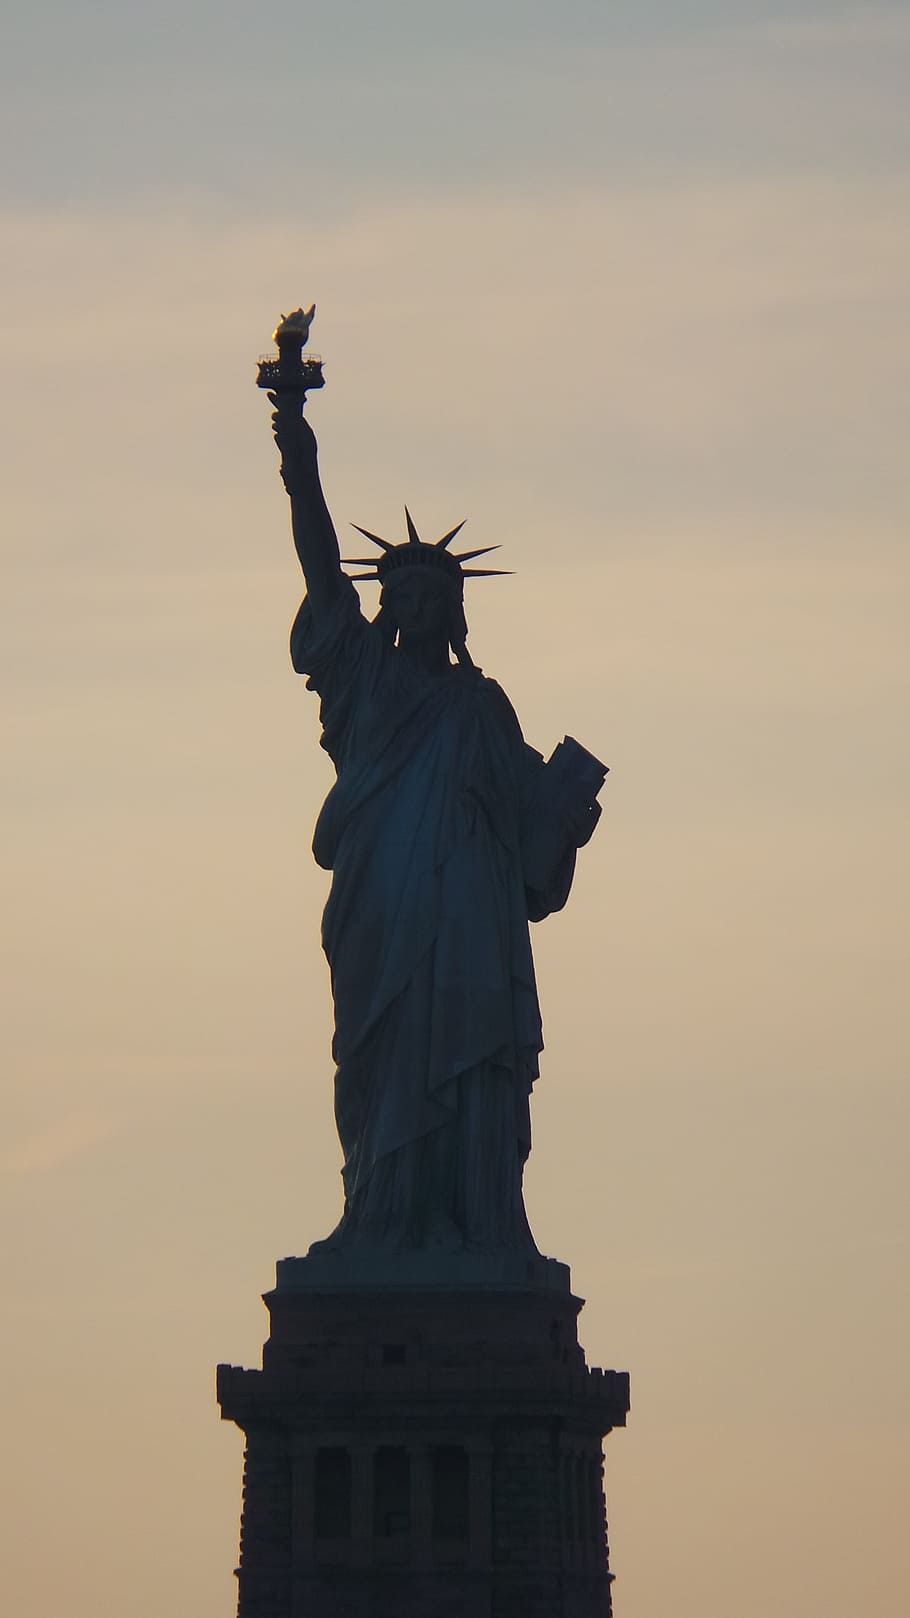 Statue Of Liberty, Liberty, New York, Silhouette, new york, statue, monument, famous Place, new York City, liberty Island, uSA